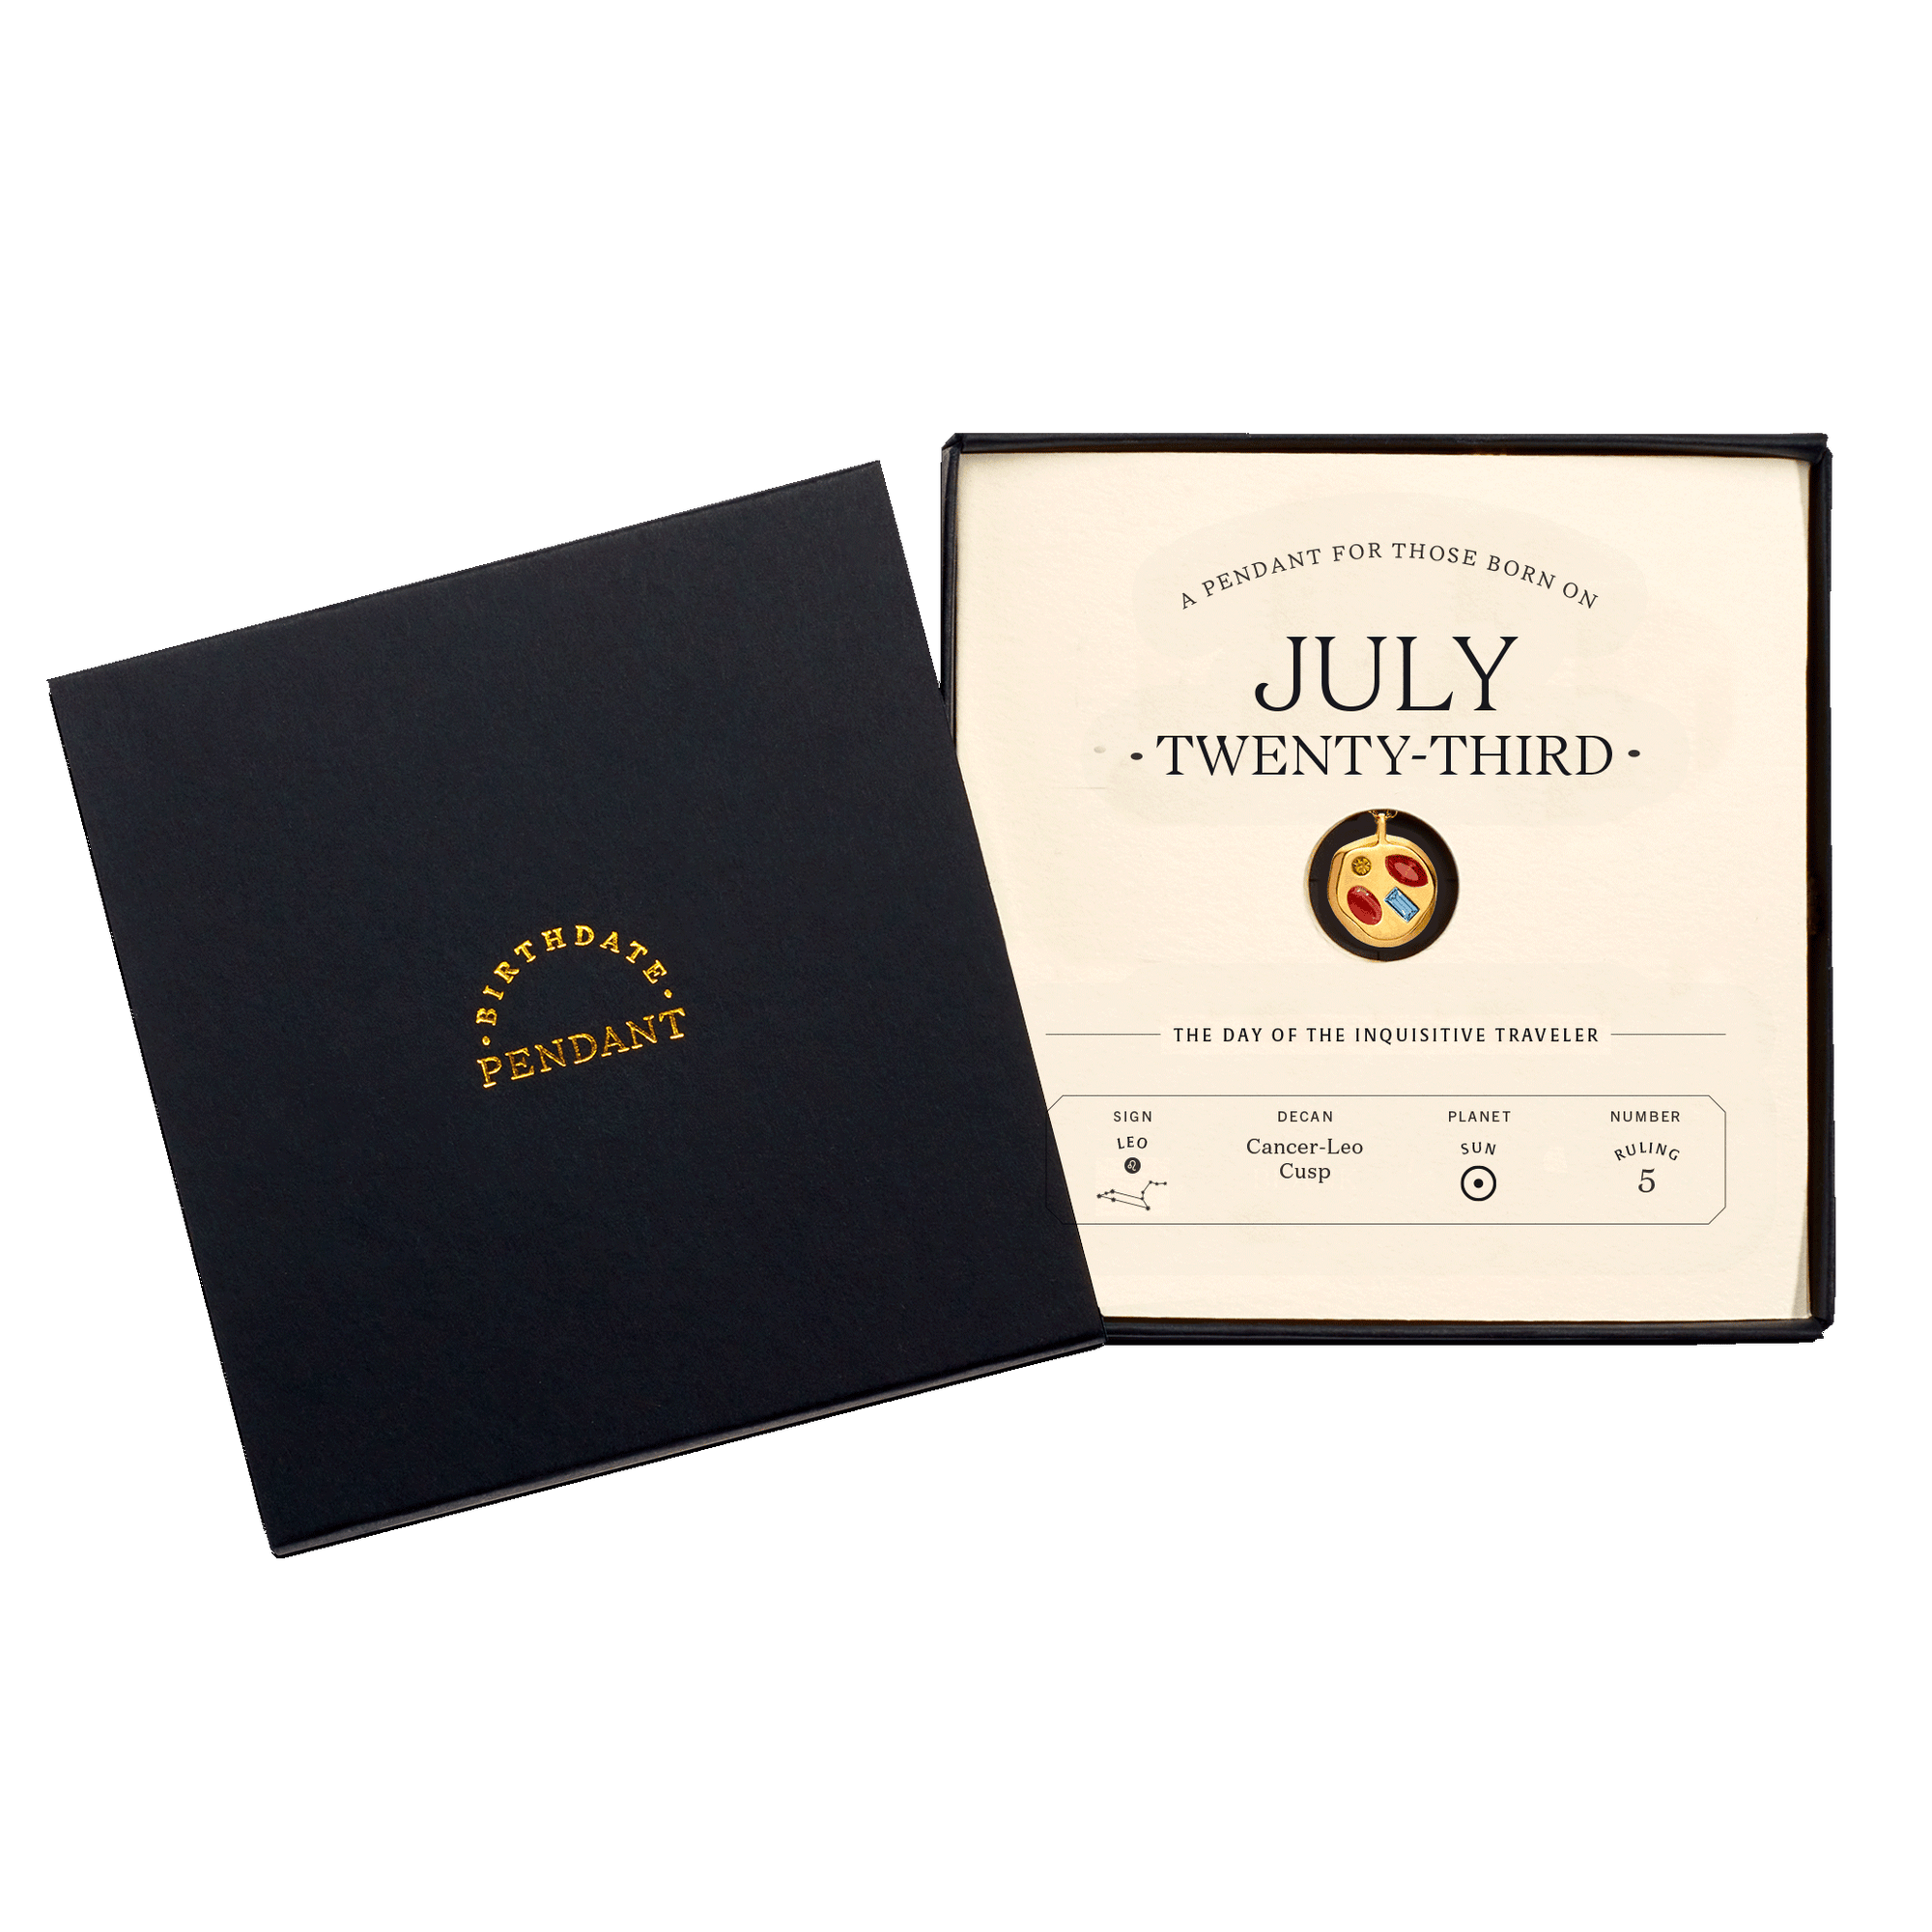 The July Twenty-Third Pendant inside its box